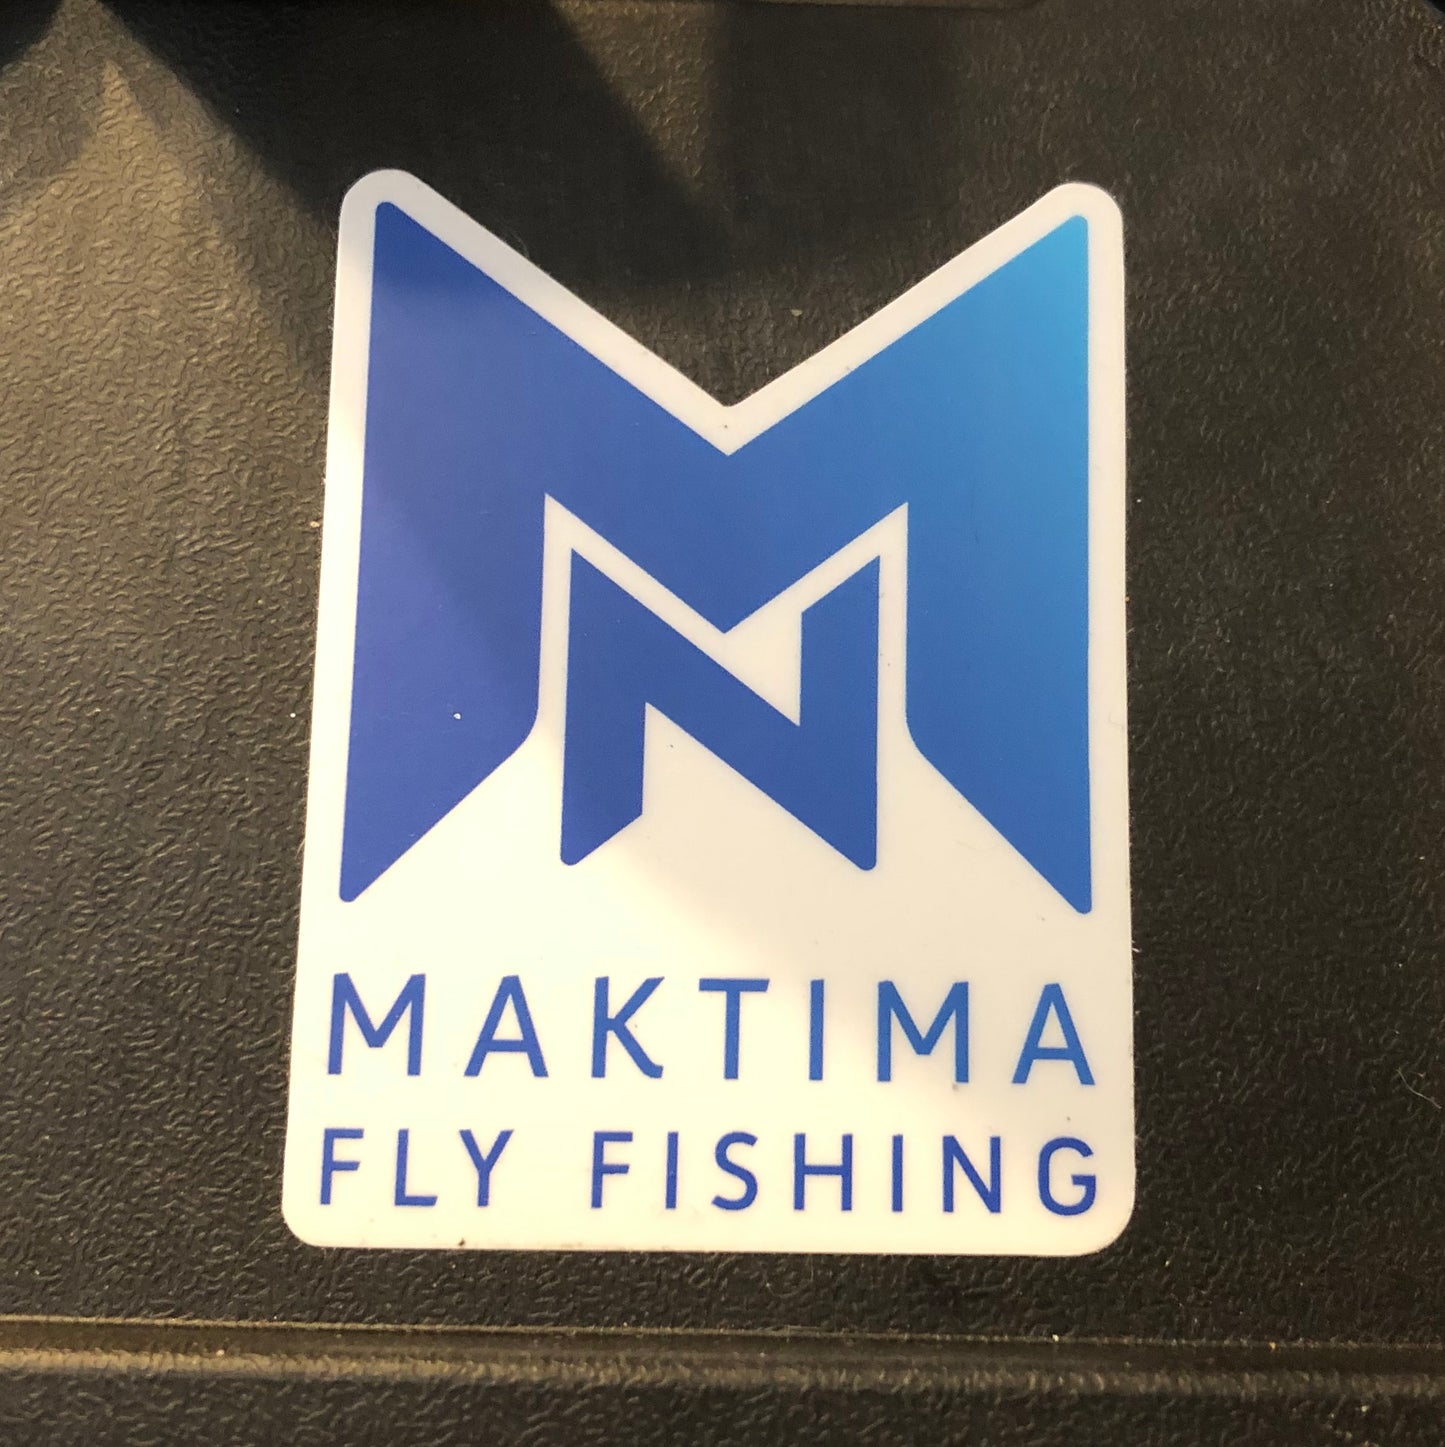 NMaktima Fly Fishing Logo Stickers